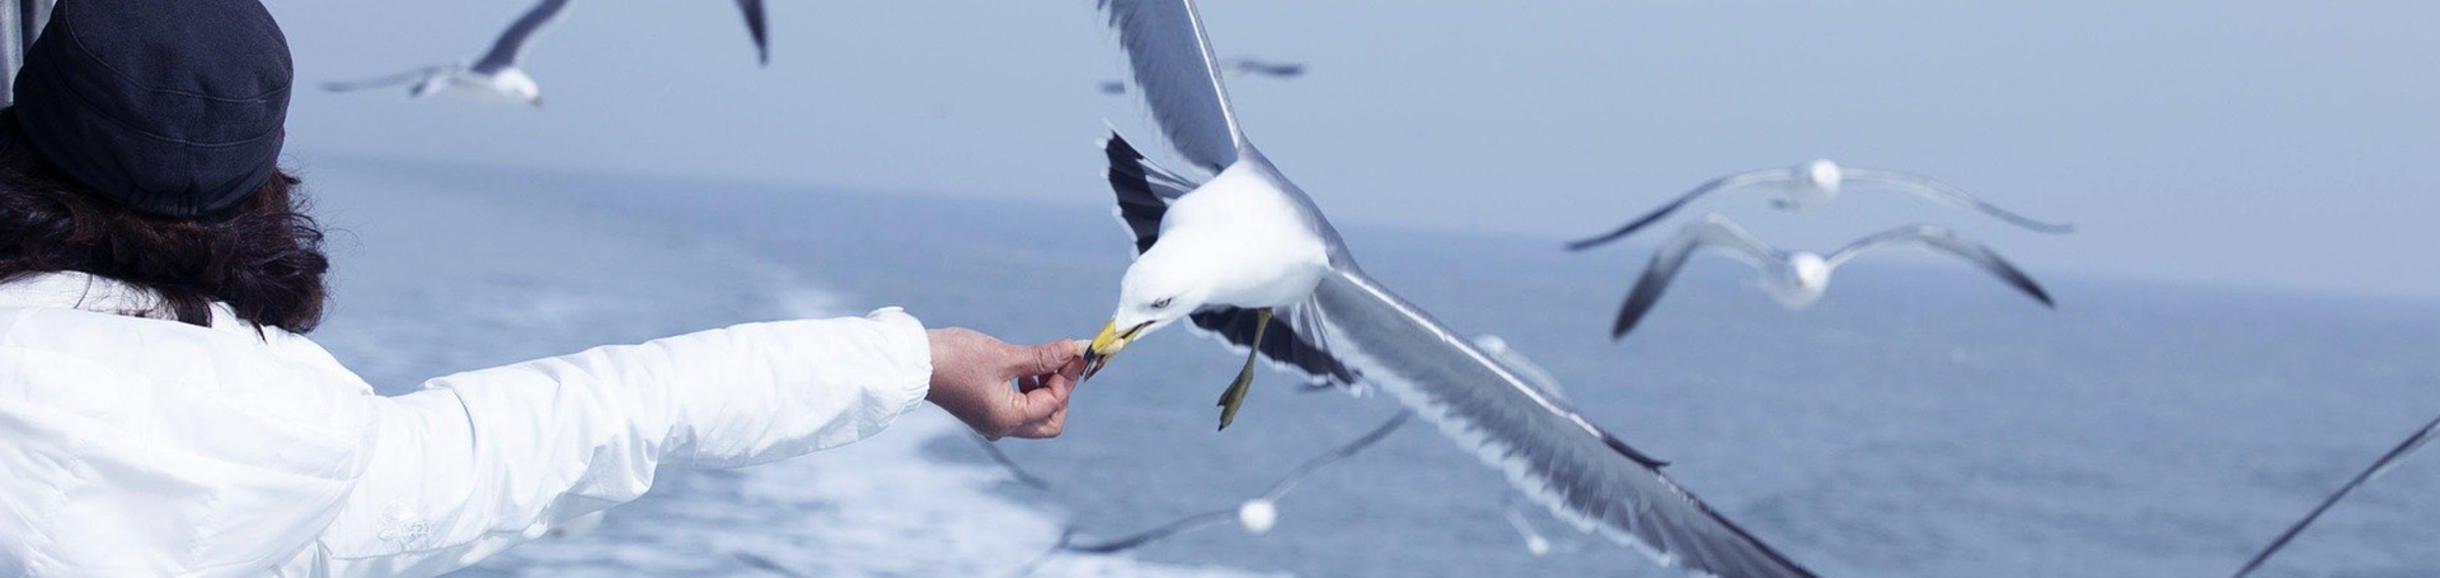 Seagull feeding in flight / pixabay.com